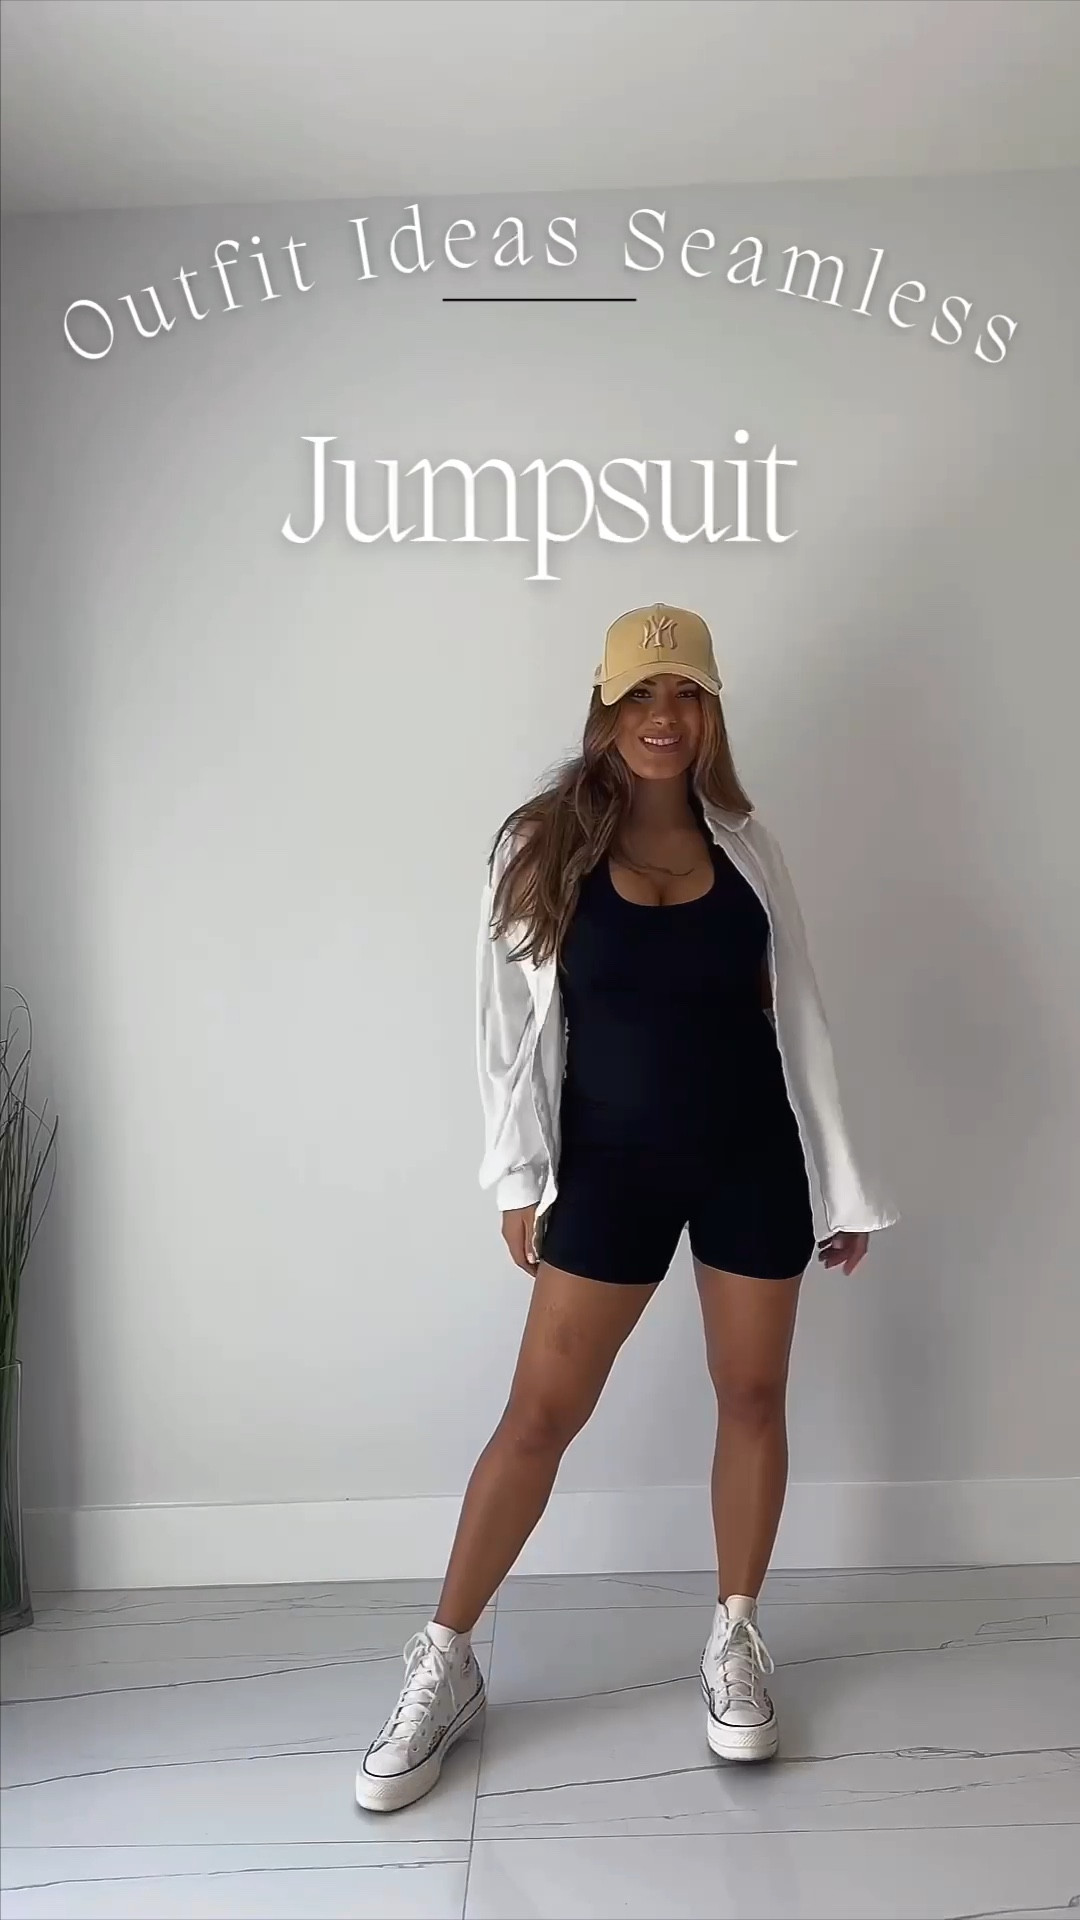 PUMIEY Women's Jumpsuits Tummy Control Seamless Workout Unitard